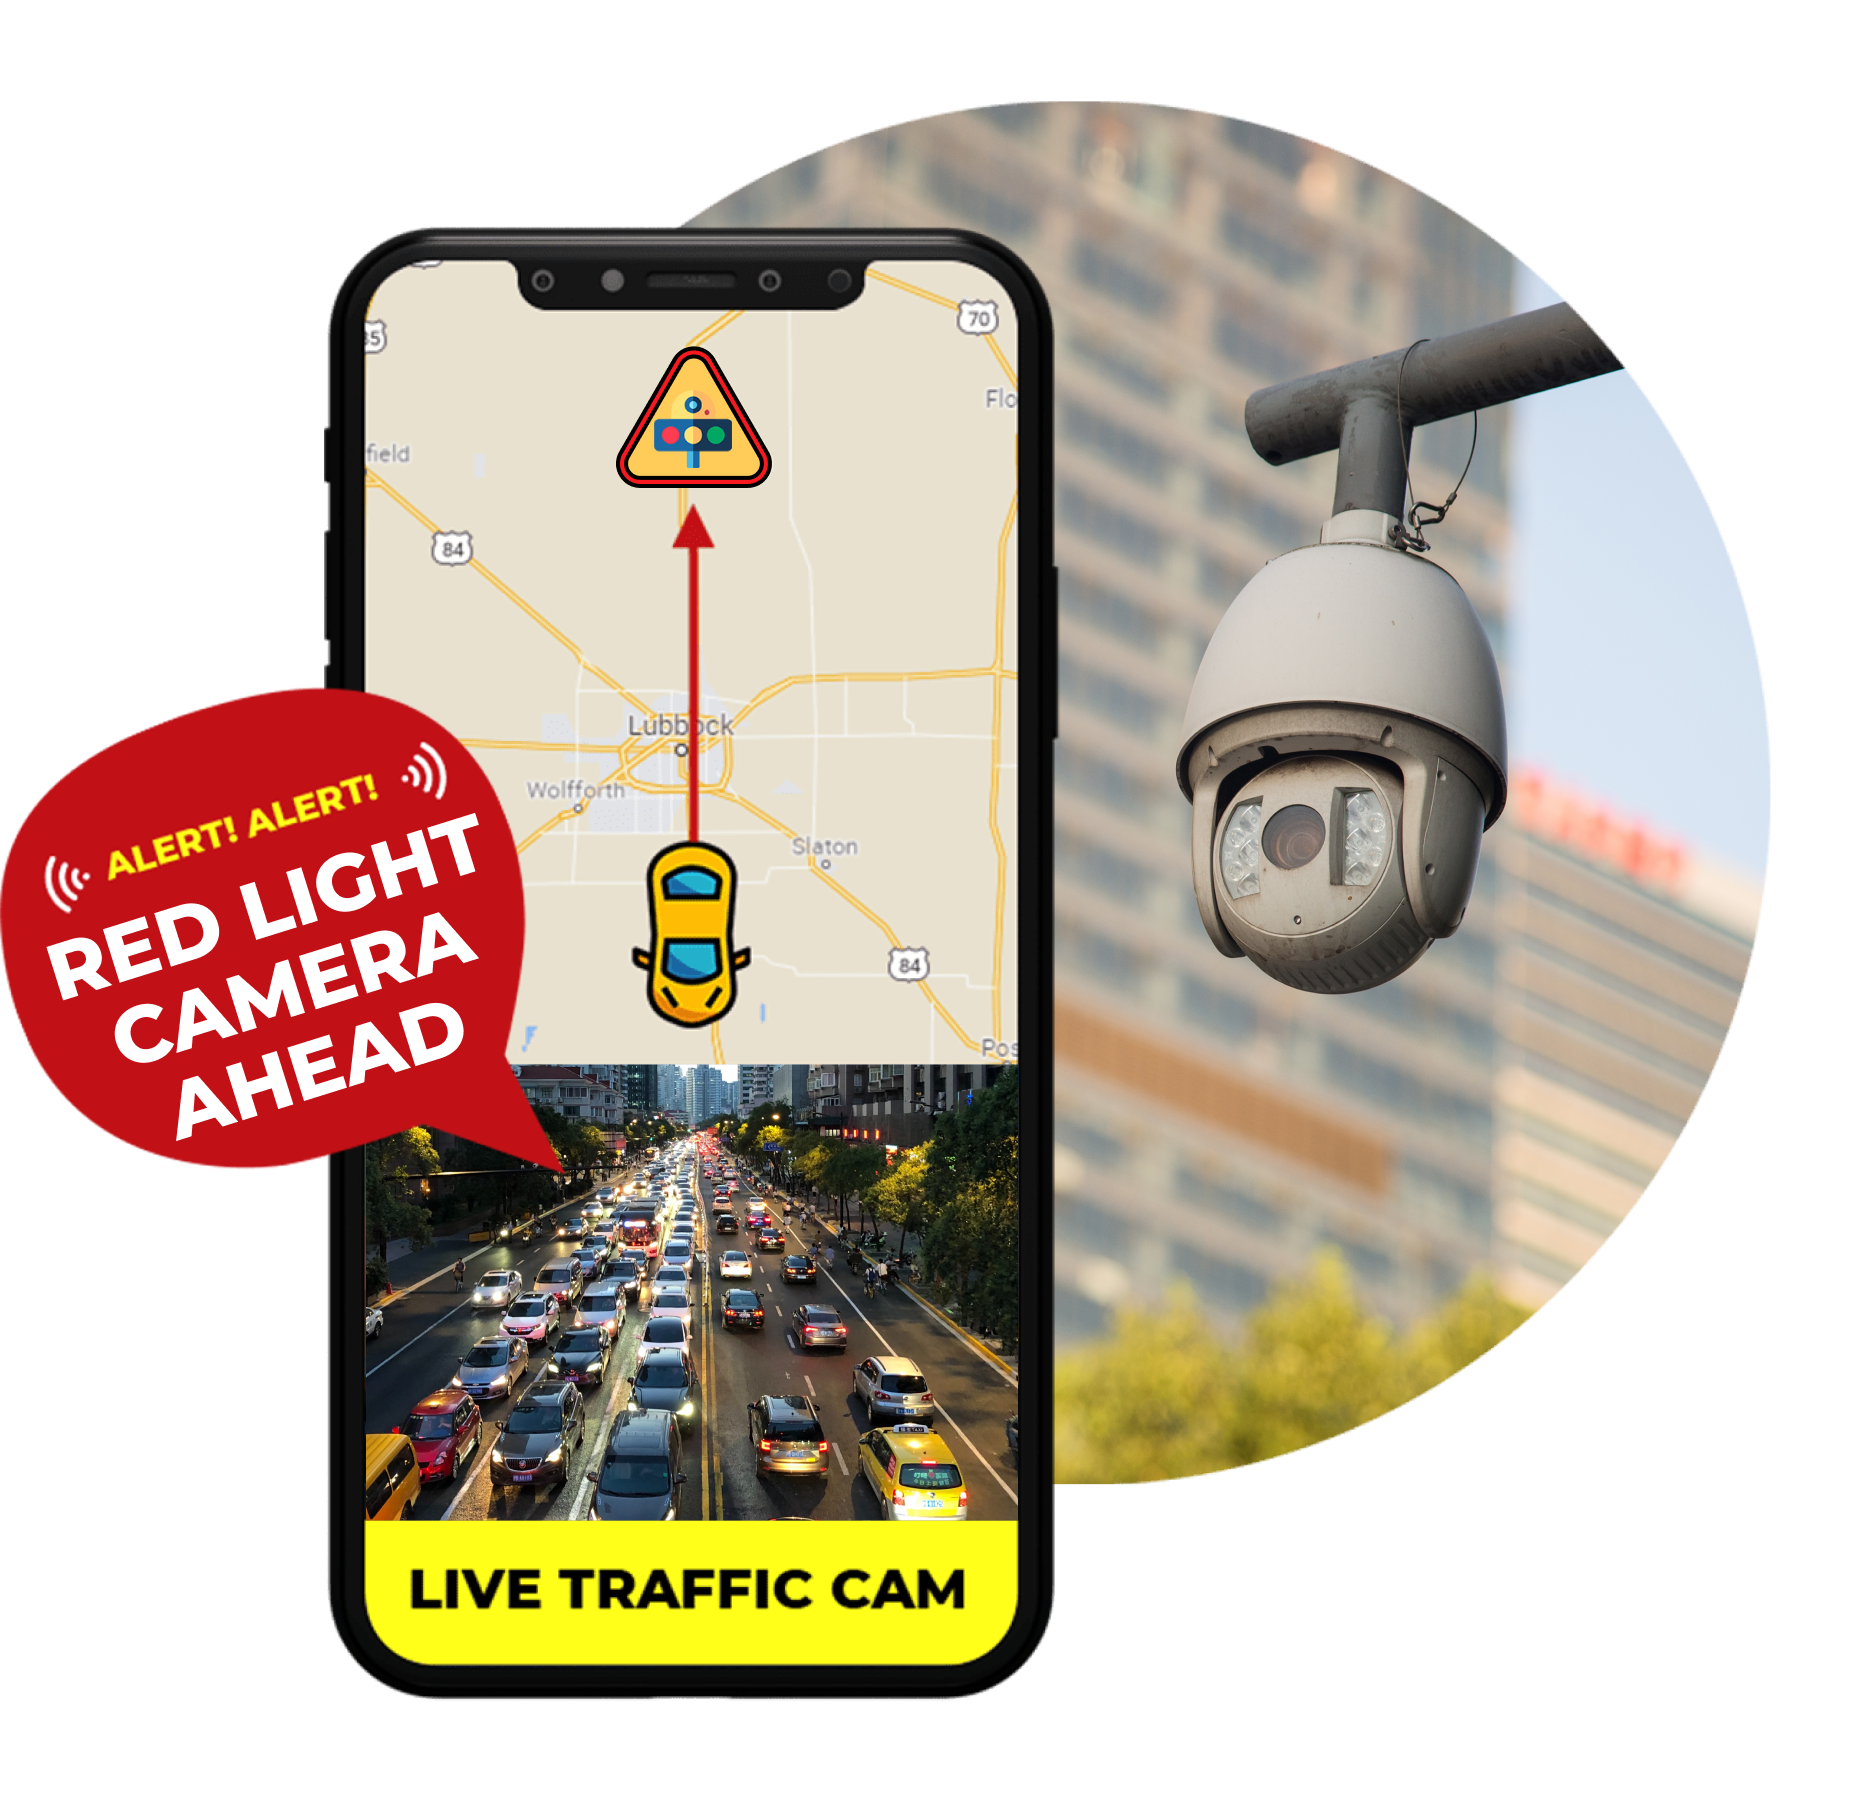 Red light camera ahead